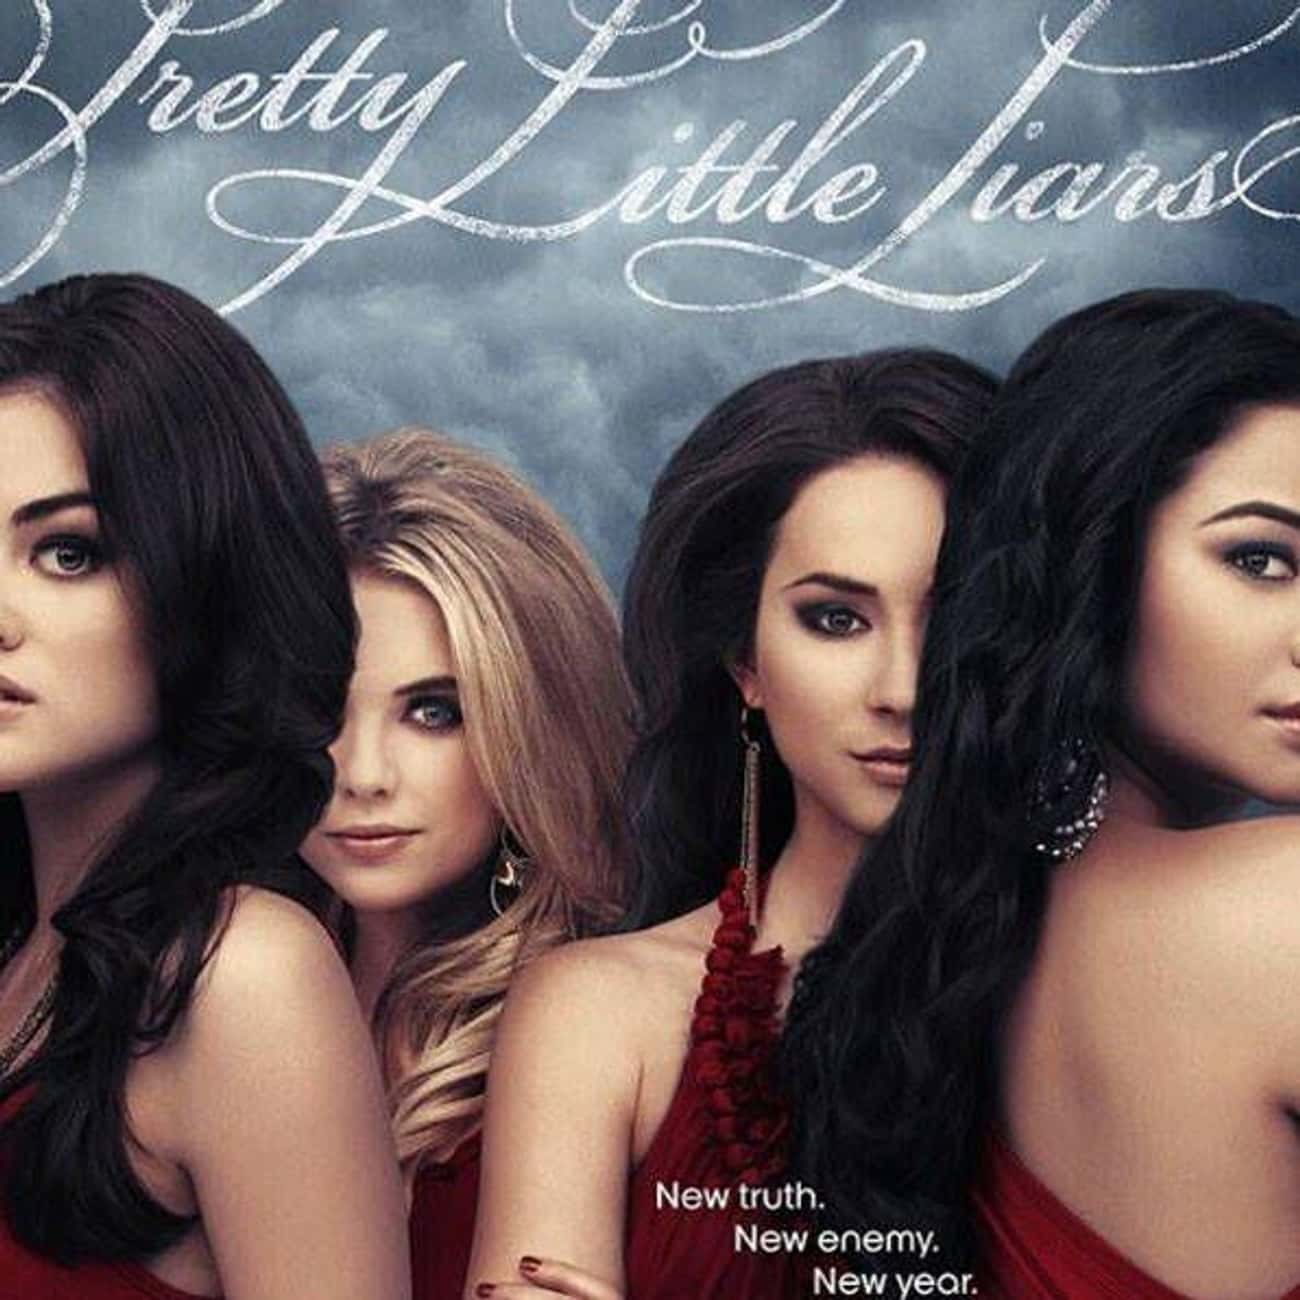 Ashley Benson Criticized A Digitally Altered 'Pretty Little Liars' Poster